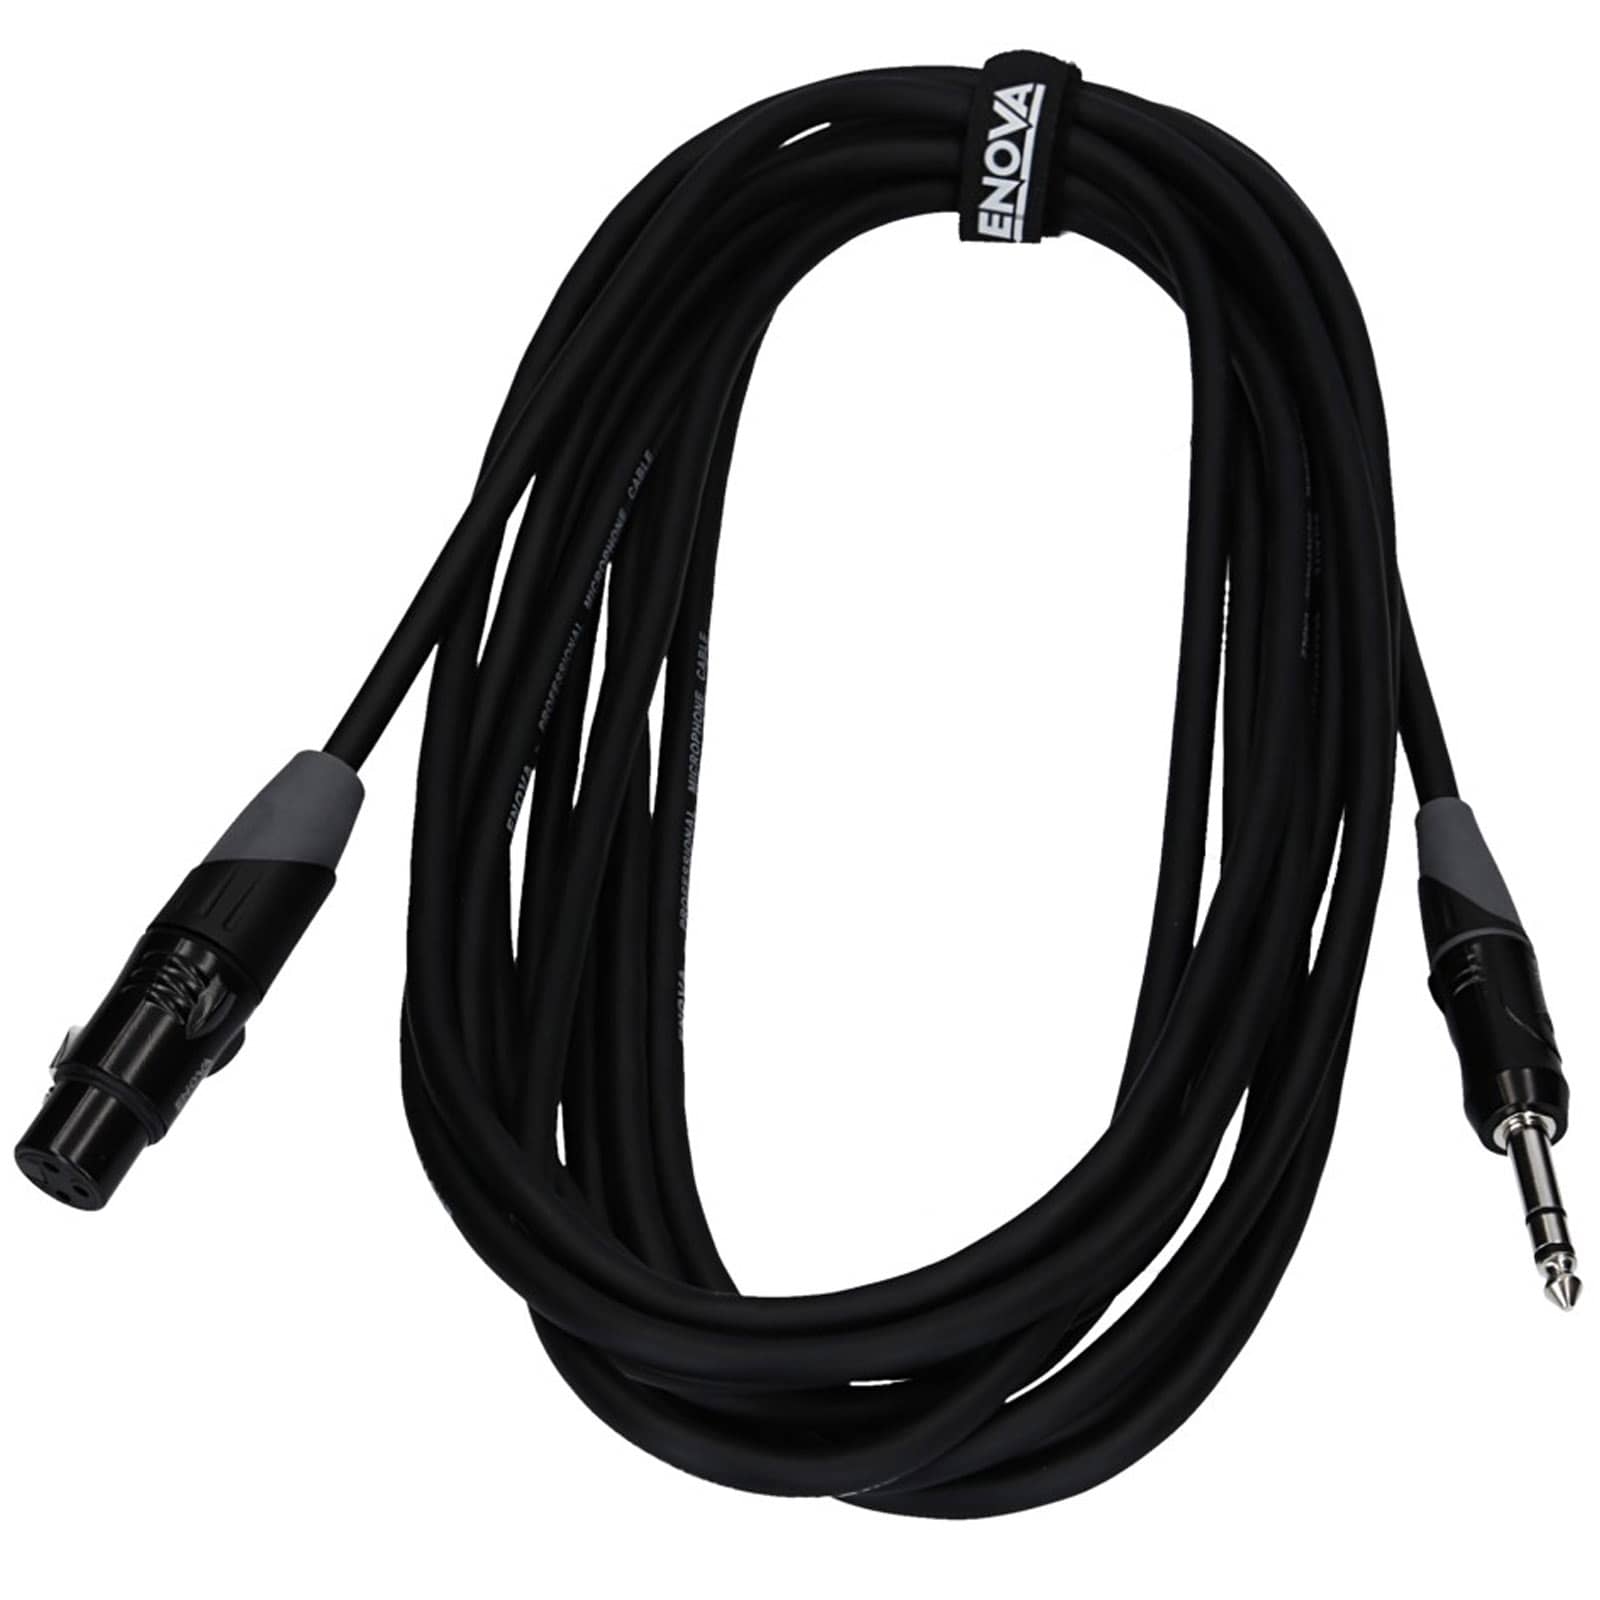 ENOVA XLR Jack Audio Cable XLFPLM3-Serie 1 m XLR female to 3-pin jack